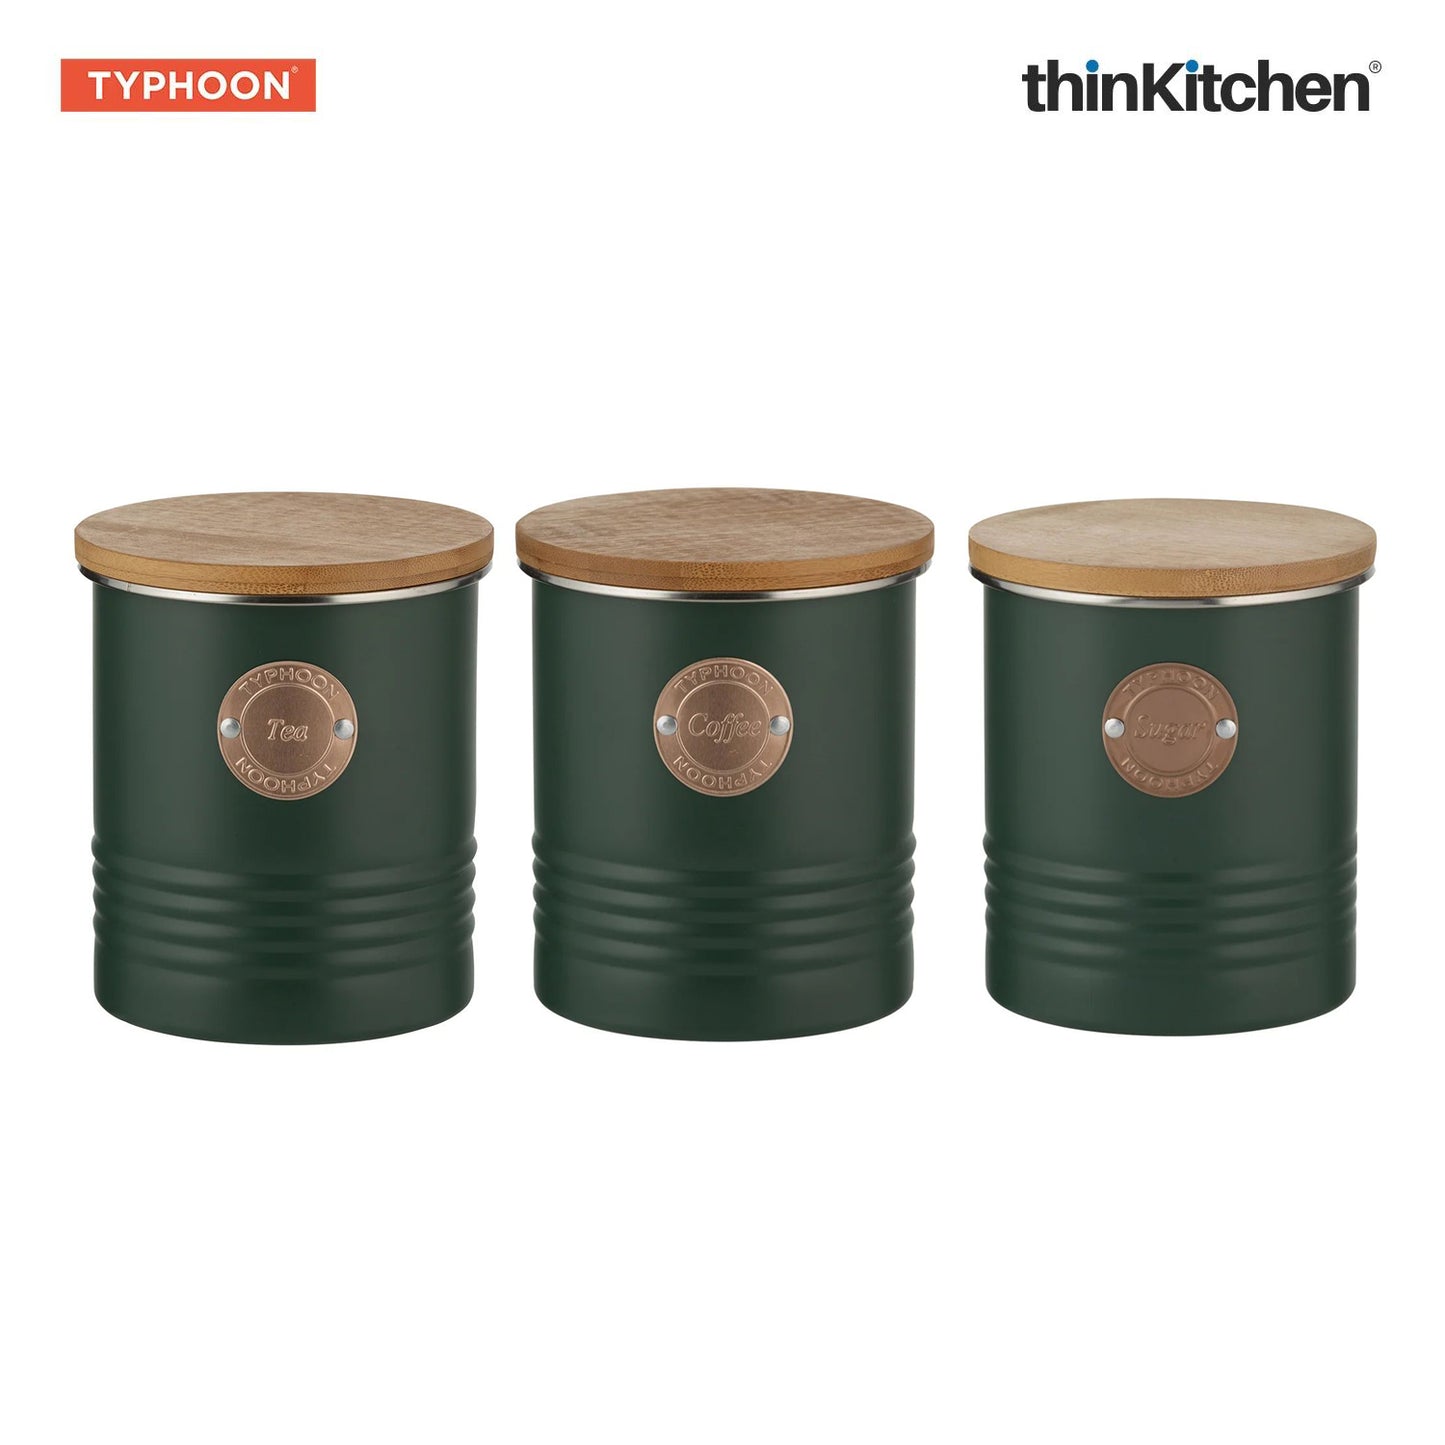 Typhoon Classic Beverage Essential Trio Living Green Tea Sugar Coffee Container Set